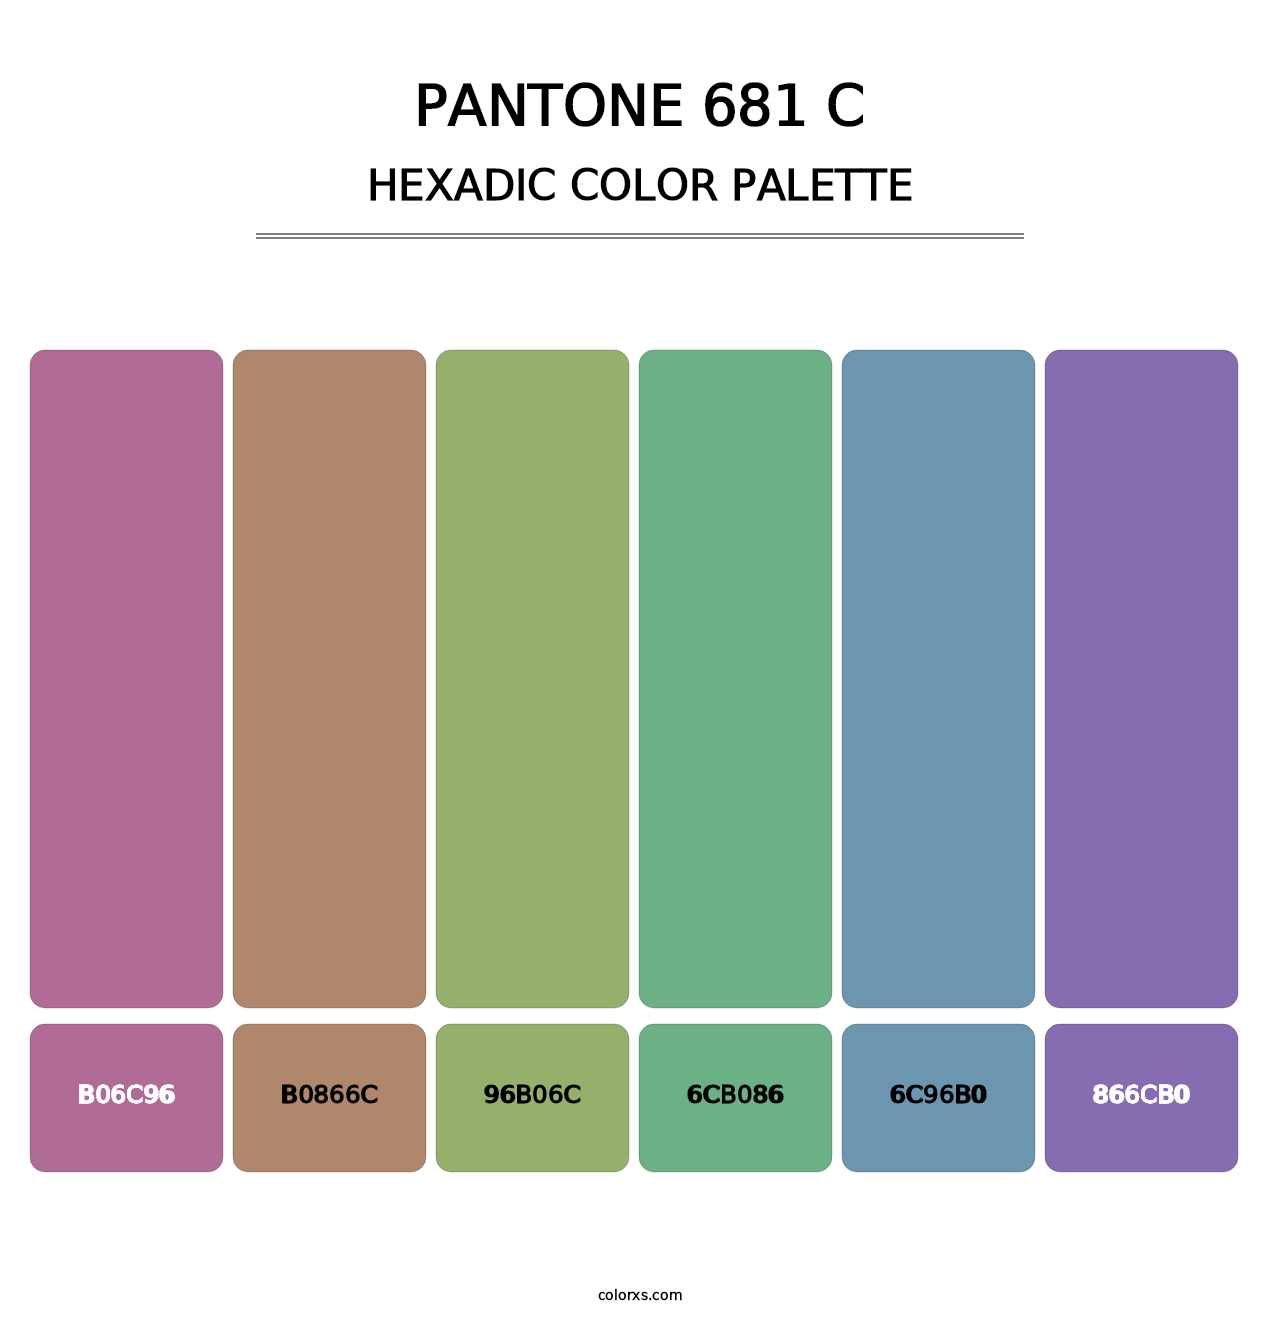 PANTONE 681 C - Hexadic Color Palette